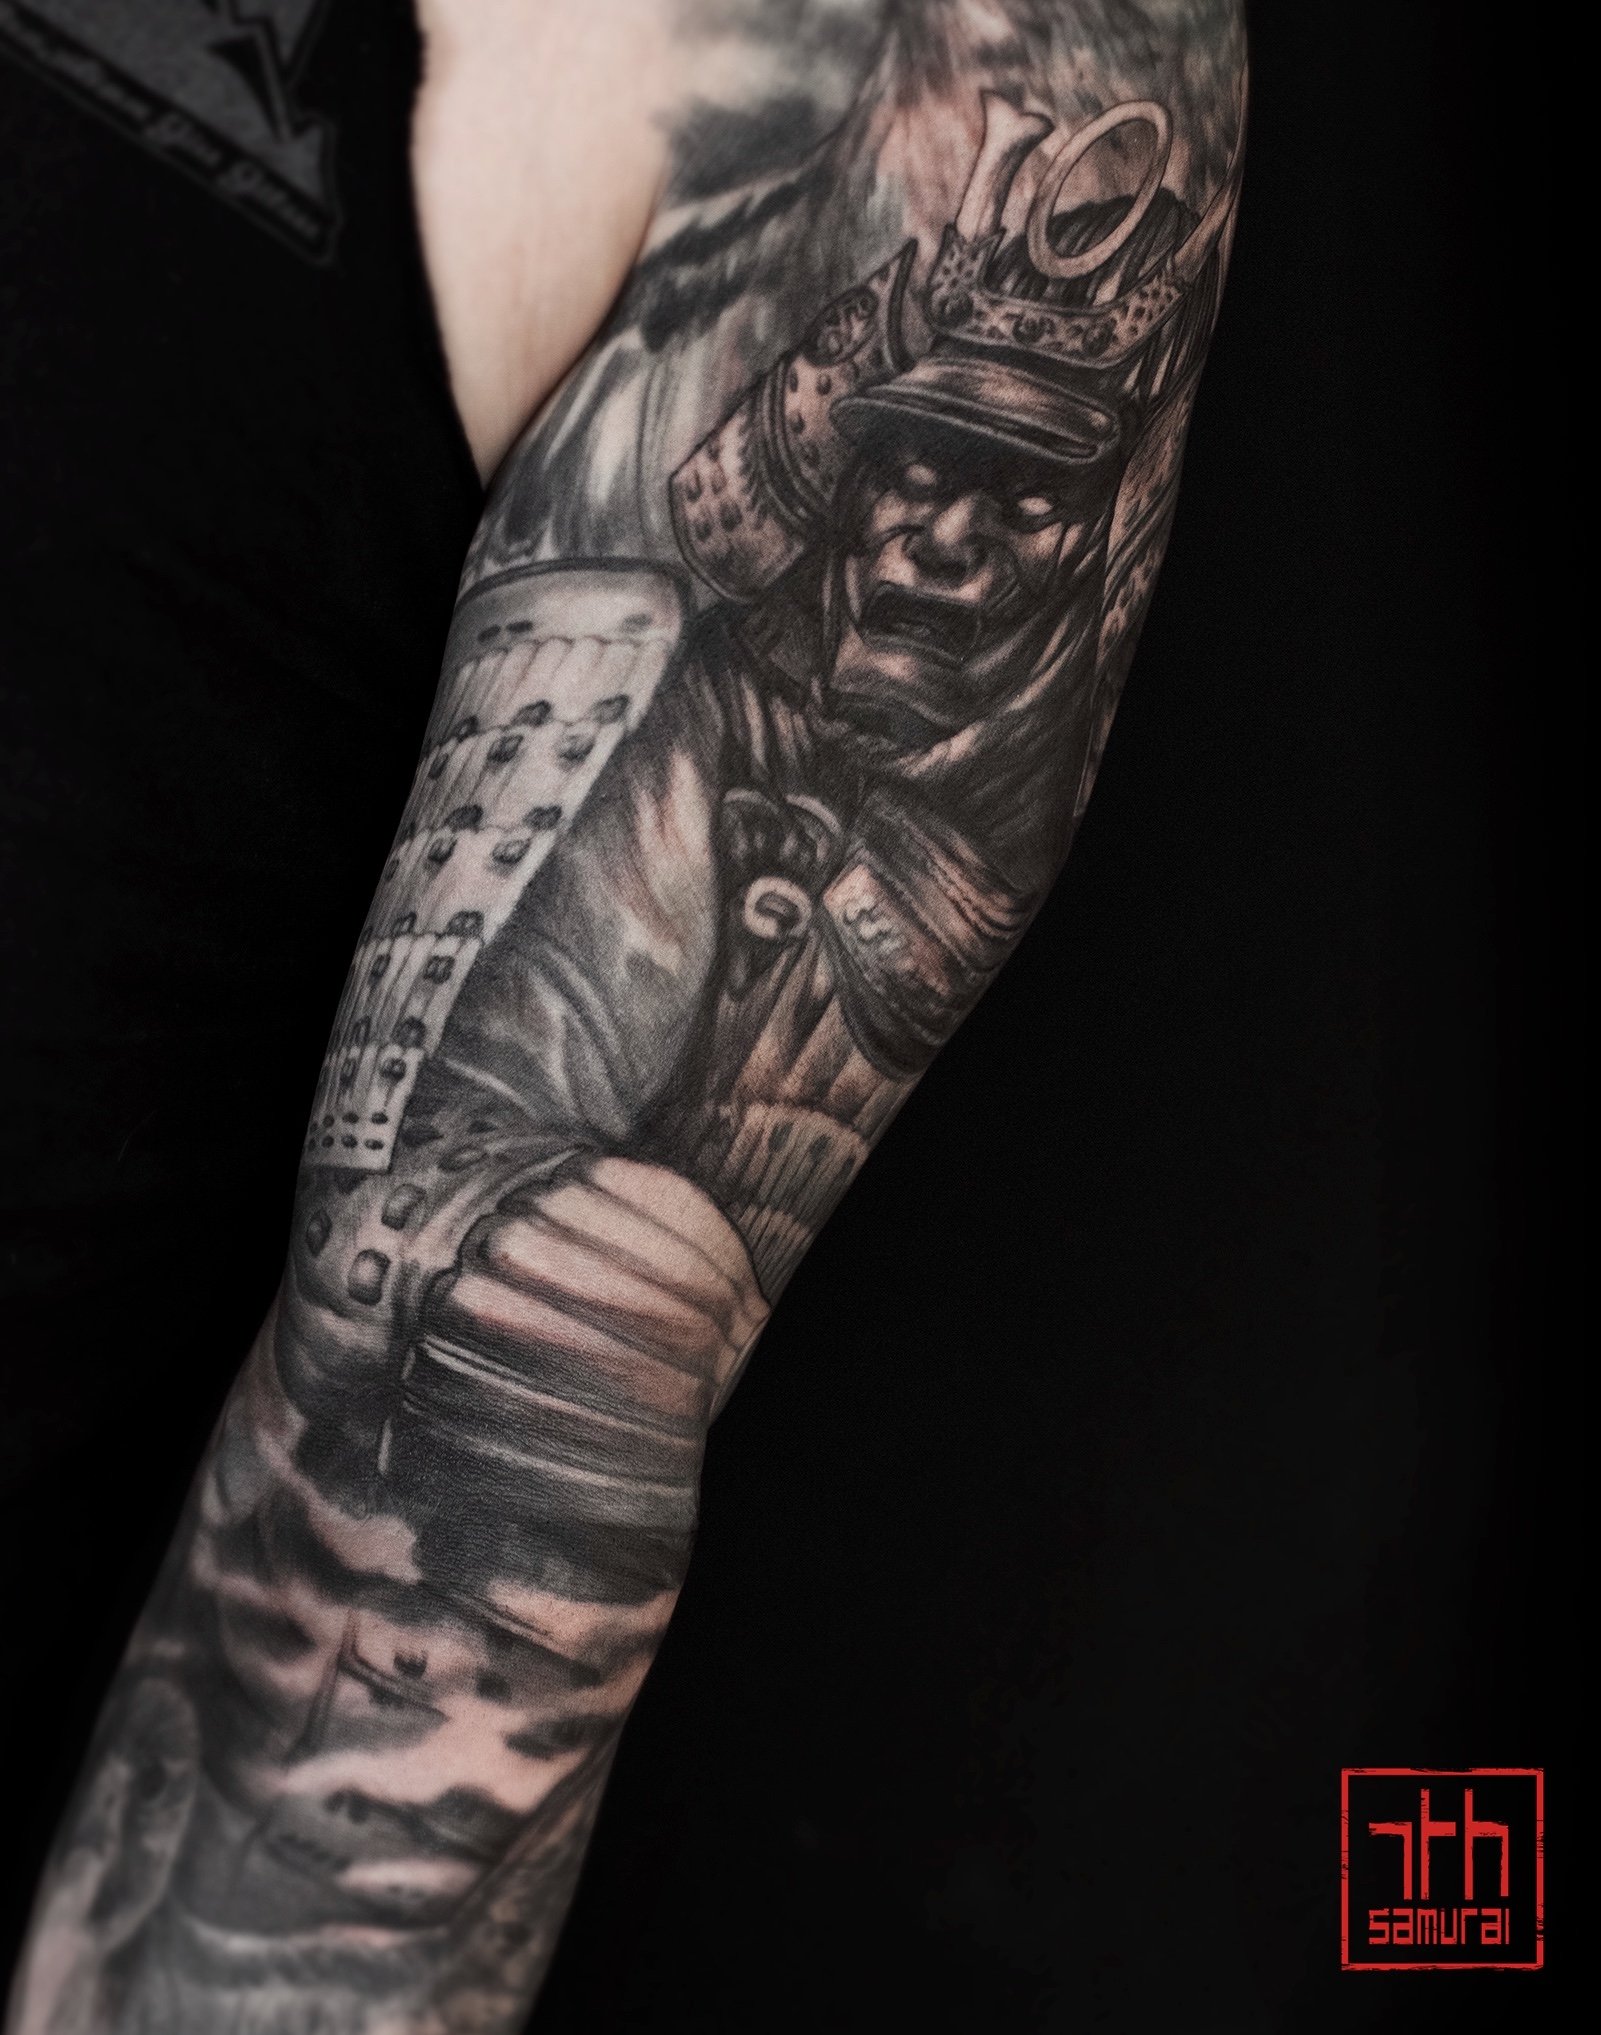 samurai  birds of prey falcon  hawk  Men's japanese realism tattoo sleeve  asian Tattoo artist: Kai at 7th Samurai. YEG Edmonton, Alberta, Canada) best 2020 